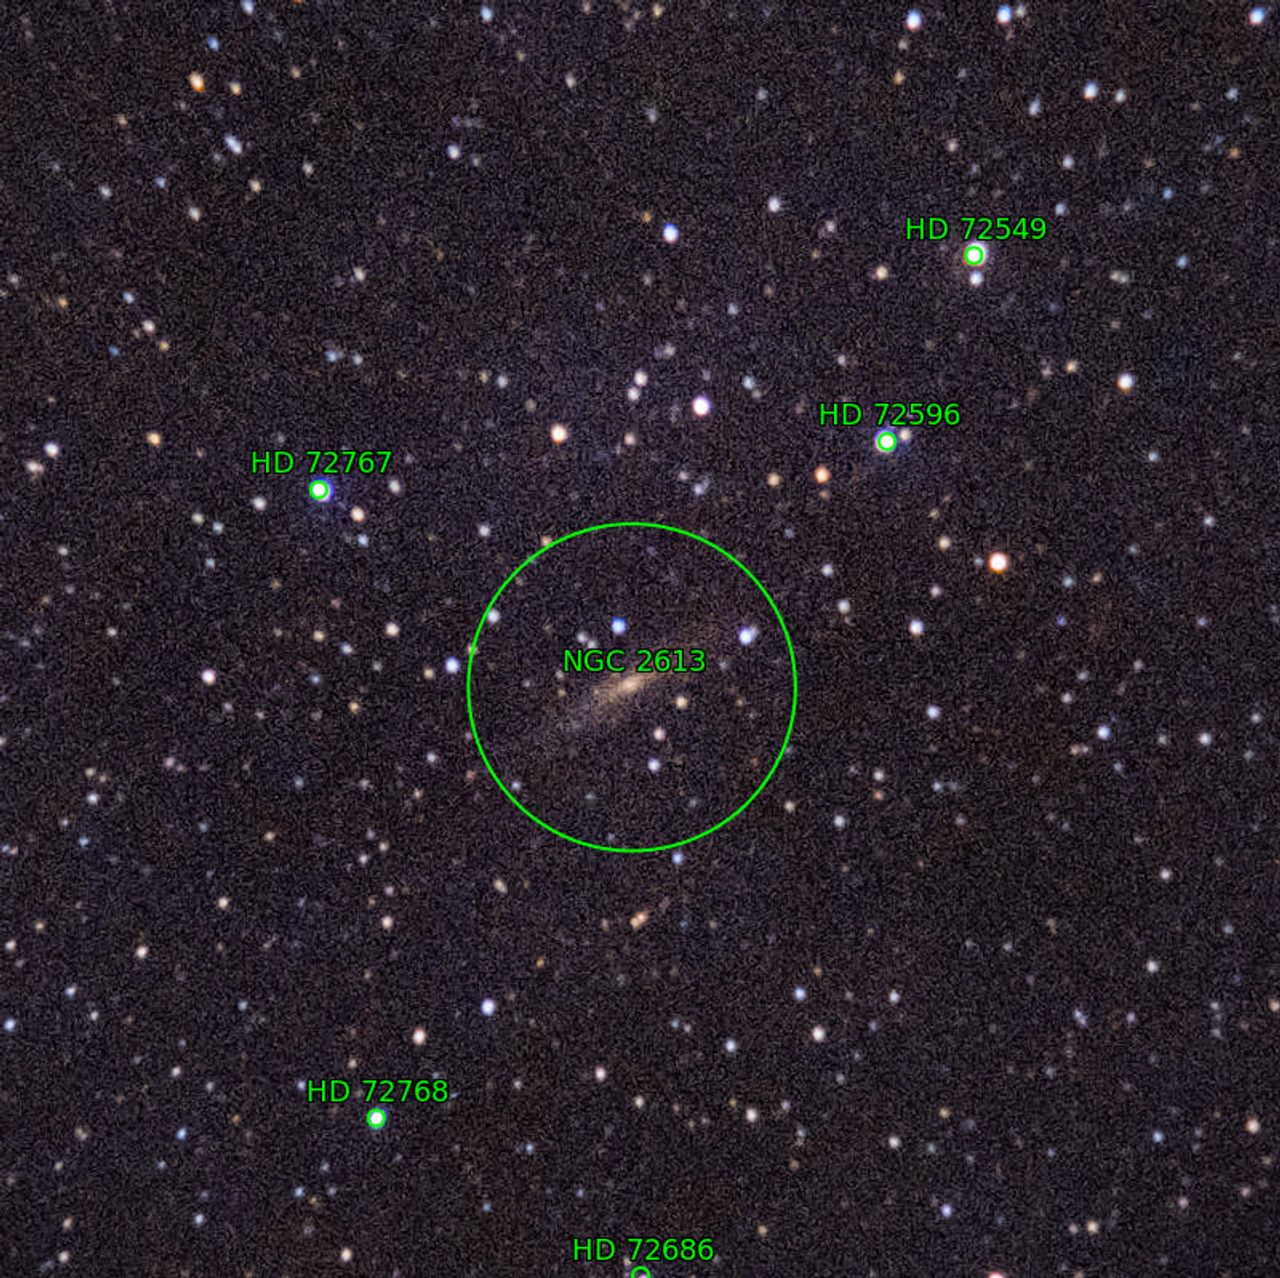 Annotation around NGC2613